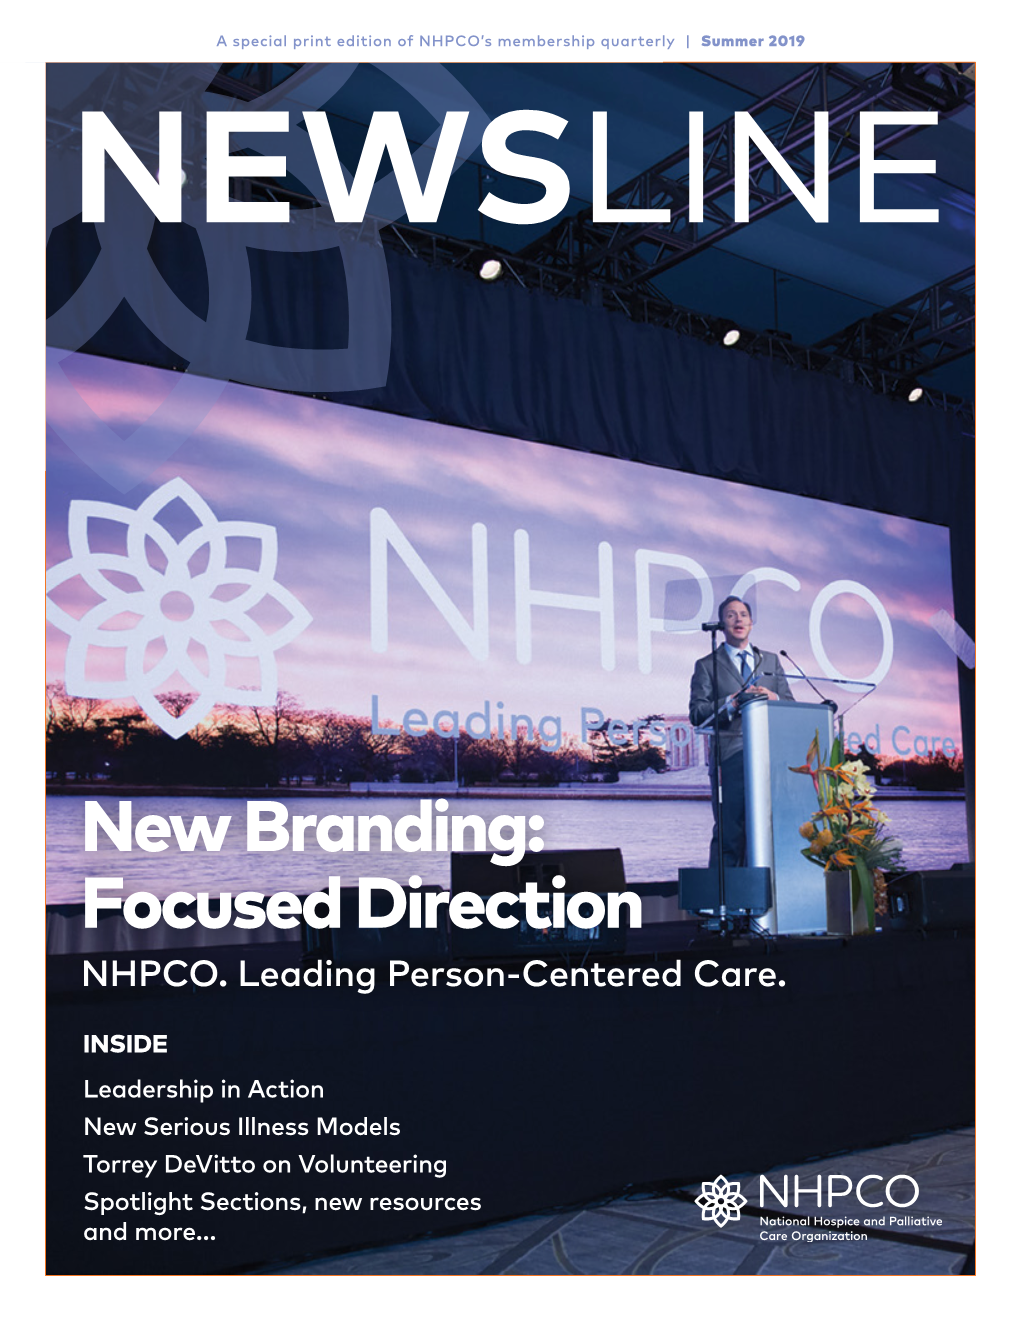 New Branding: Focused Direction NHPCO